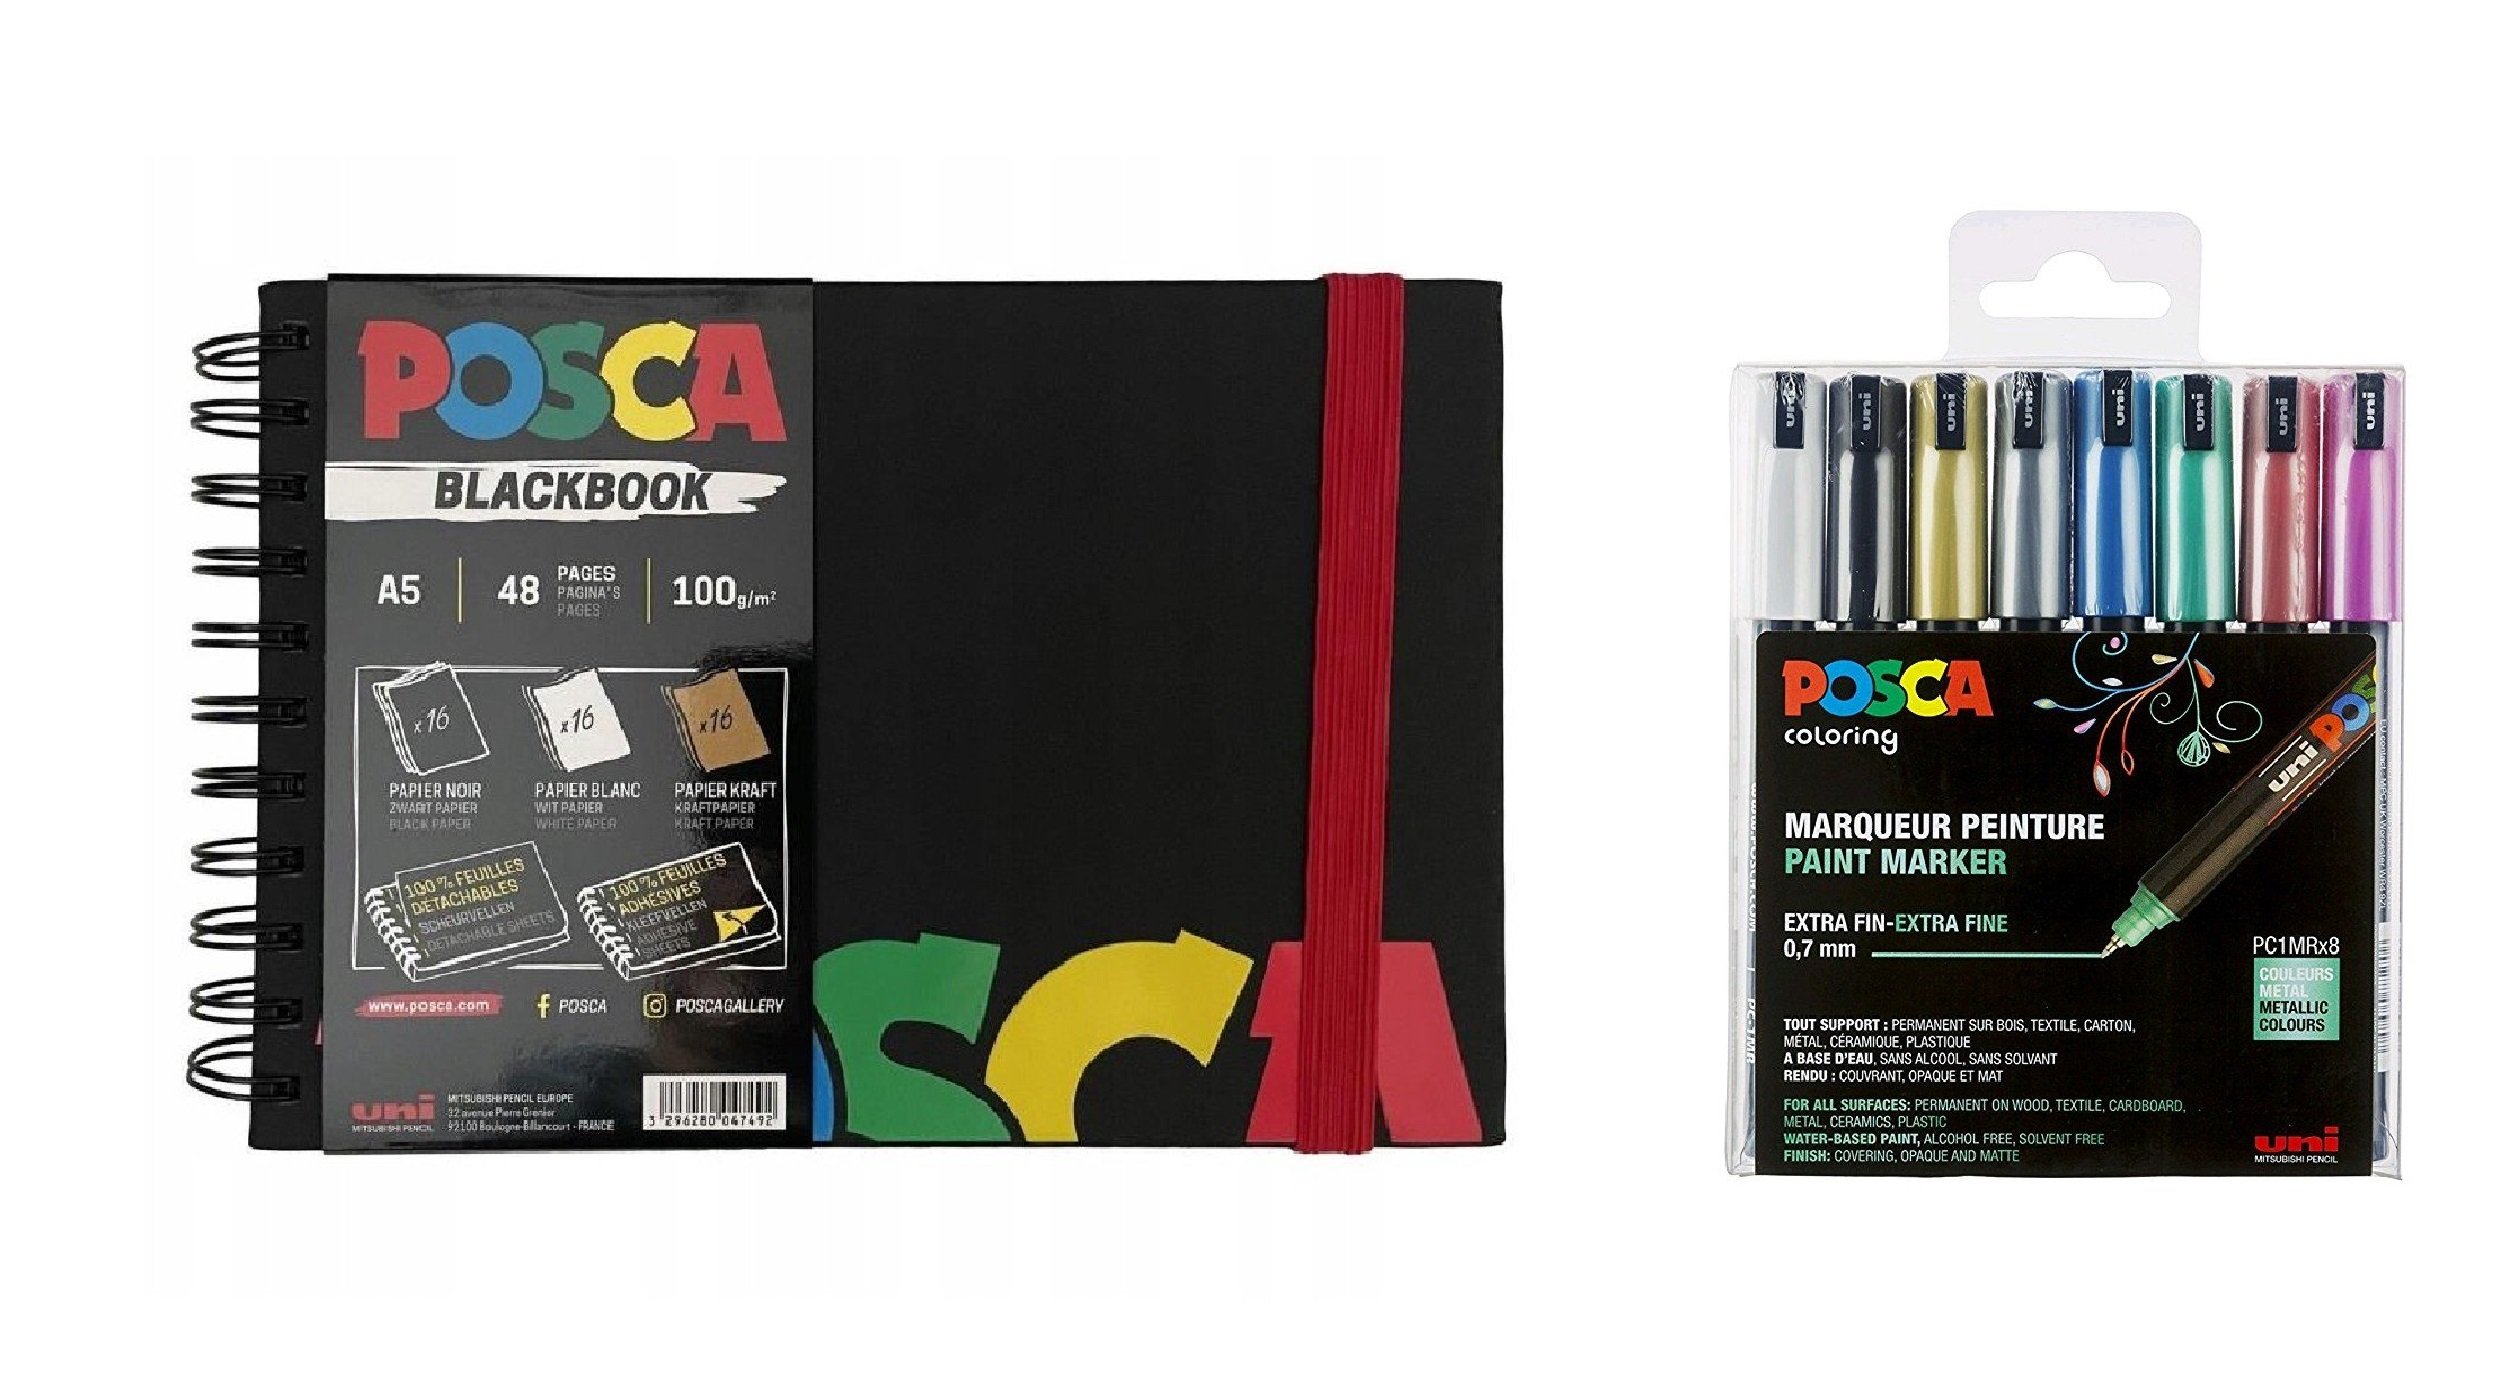 Posca - A5 BlackBook&PC1MR - Extra Fine Tip Pen - Metallic Colors 8 pc - Leker